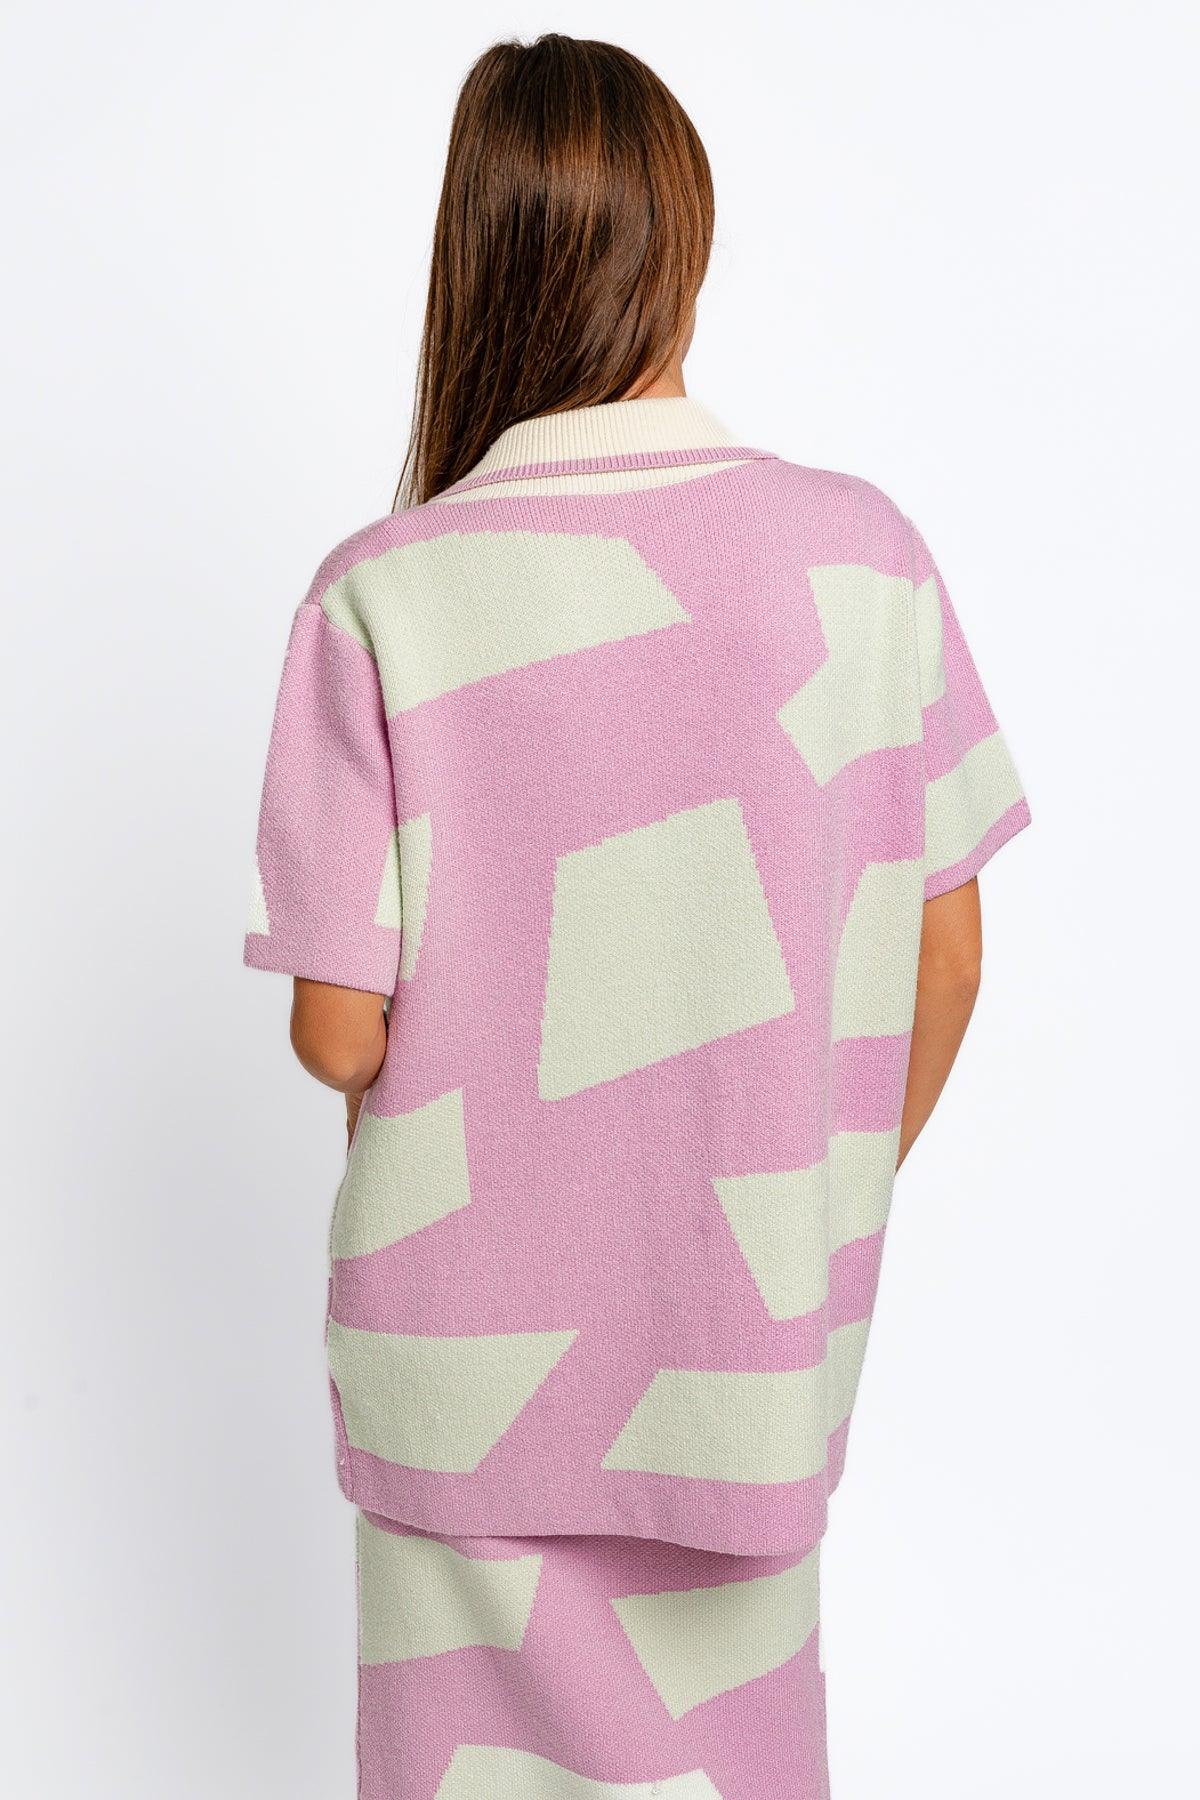 Abstract Printed Short Sleeve Collared Sweater Shirt - Tasha Apparel Wholesale